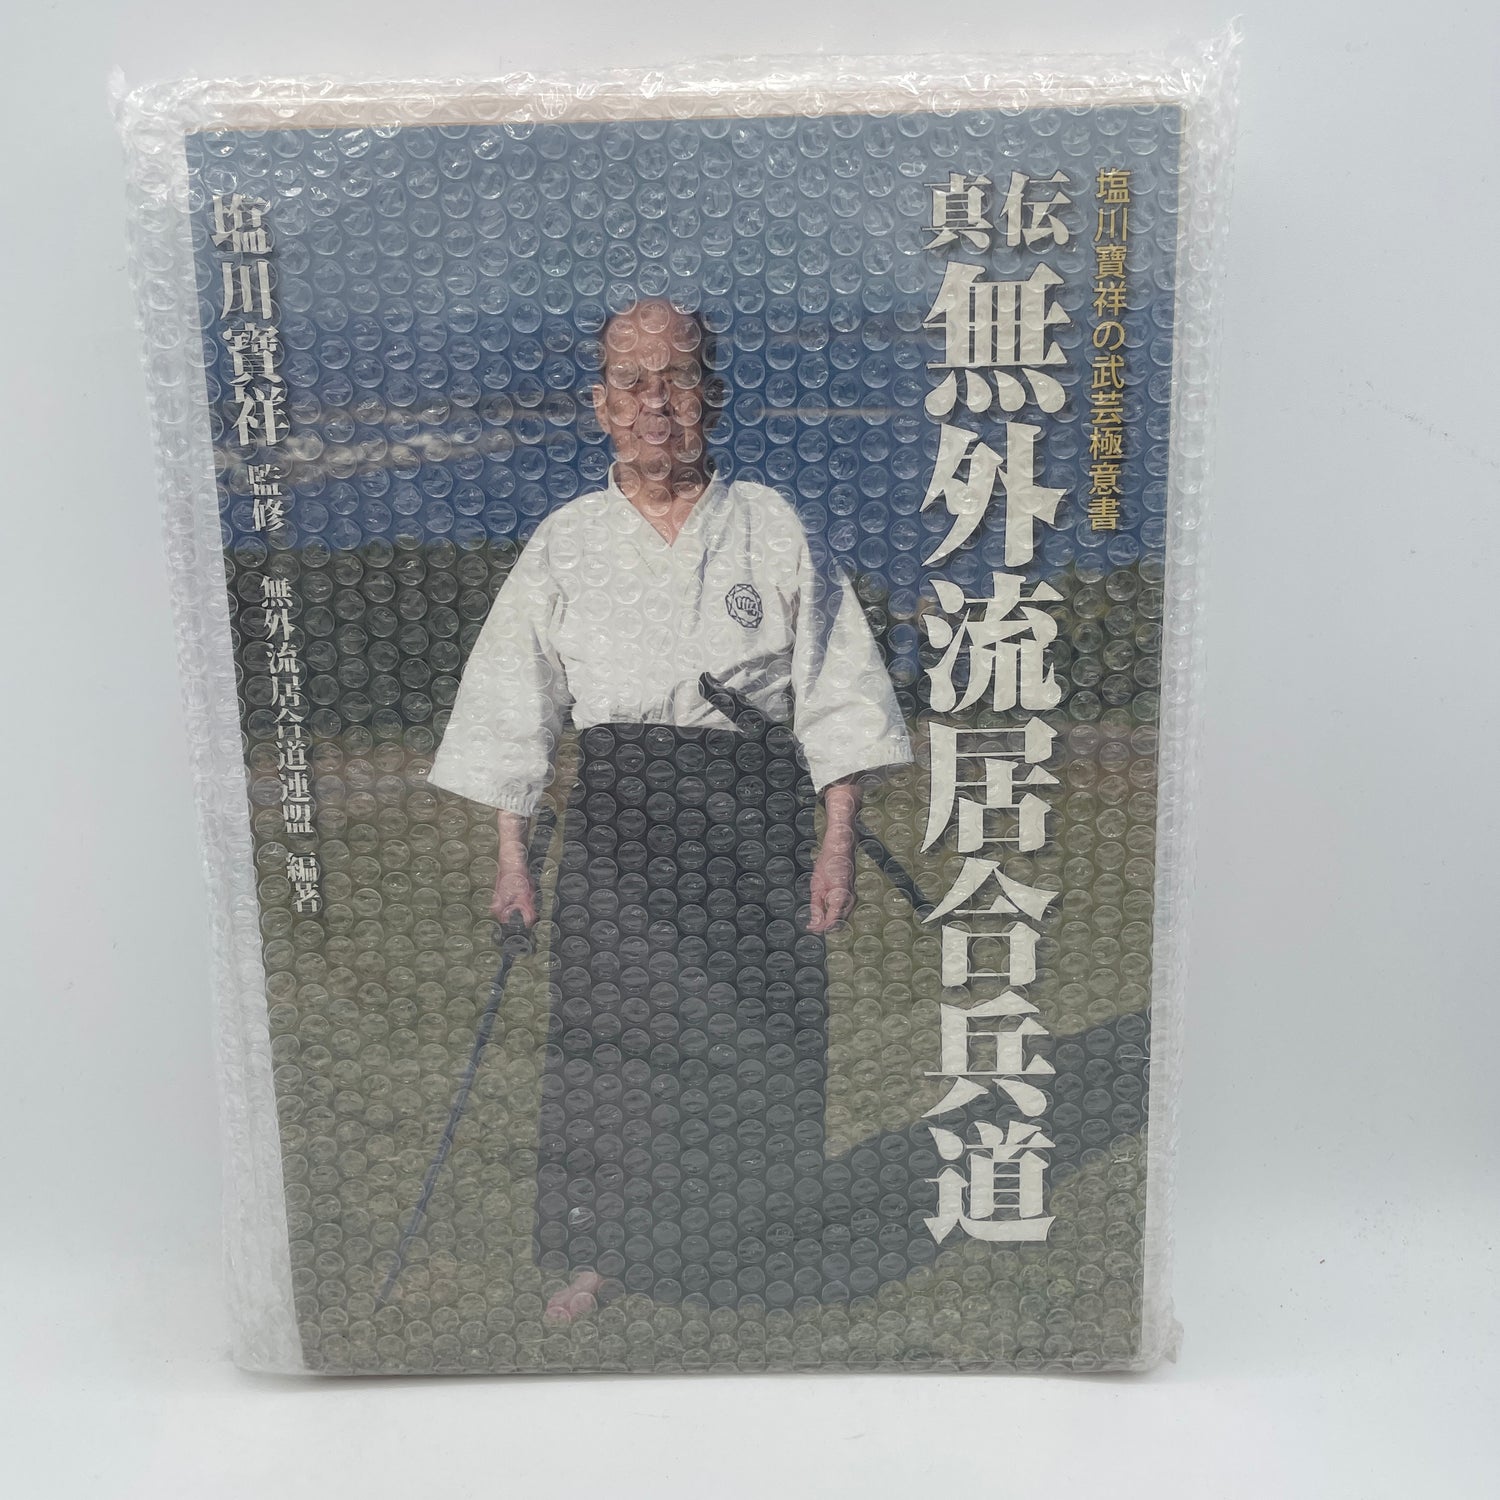 Mugai Ryu Iaihyodo Kyohan (Hardcover) Book by Hosho Shiokawa (Preowned)